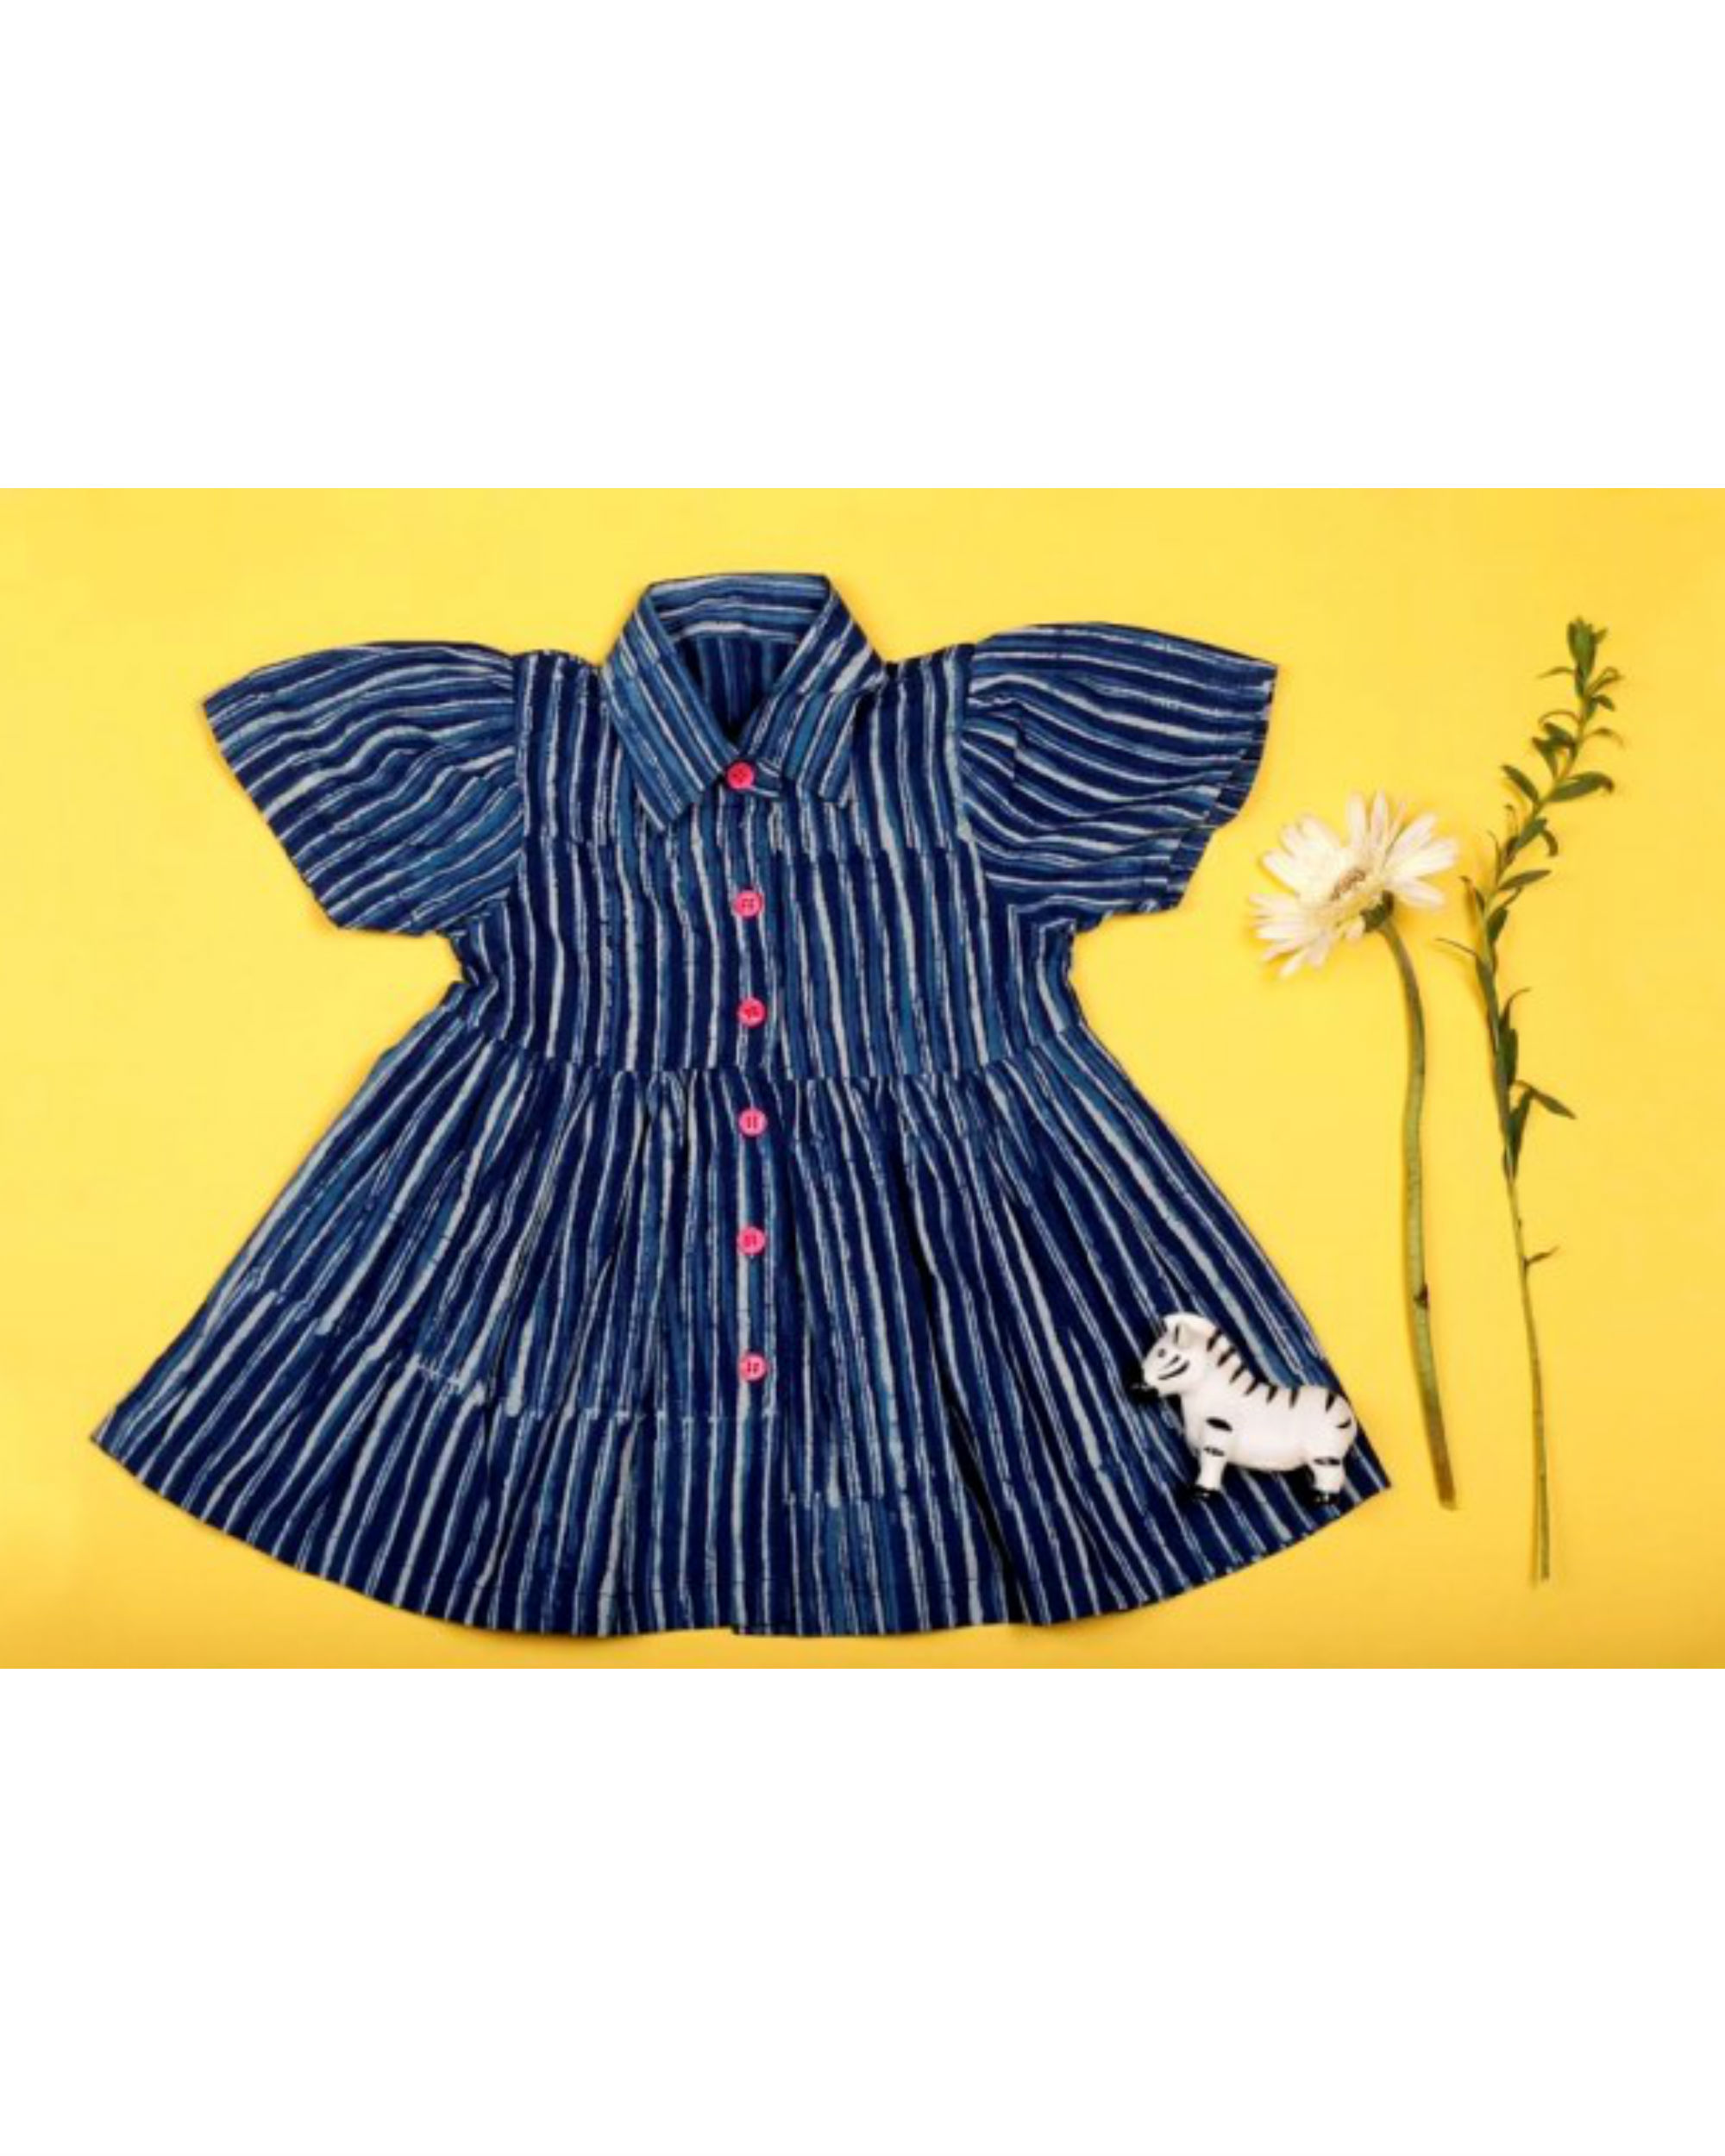 Indigo striped dress by Raasleela | The Secret Label